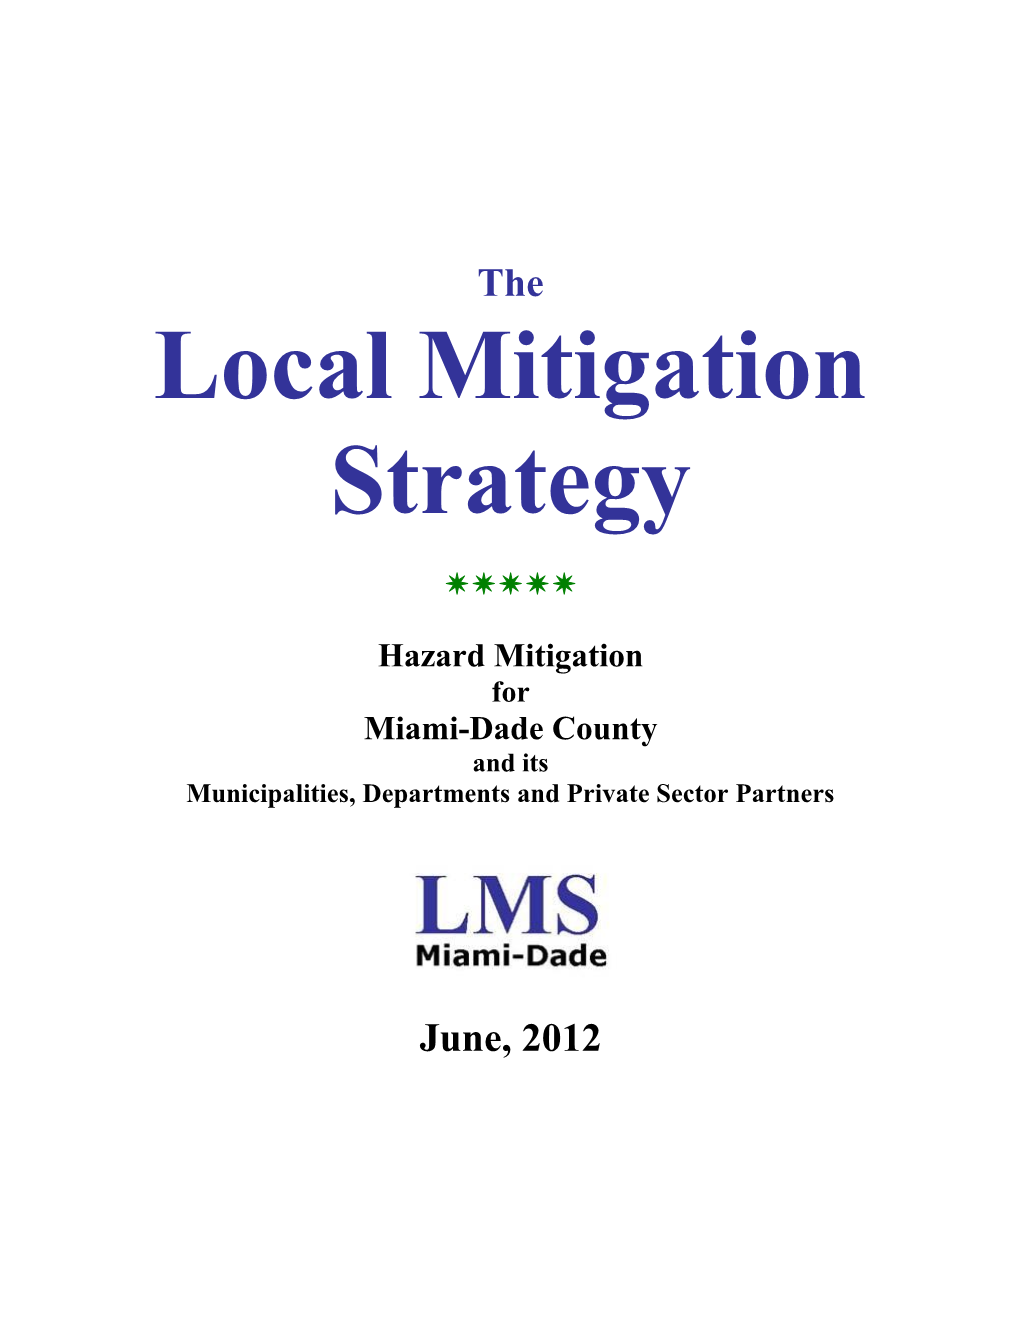 Local Mitigation Strategy